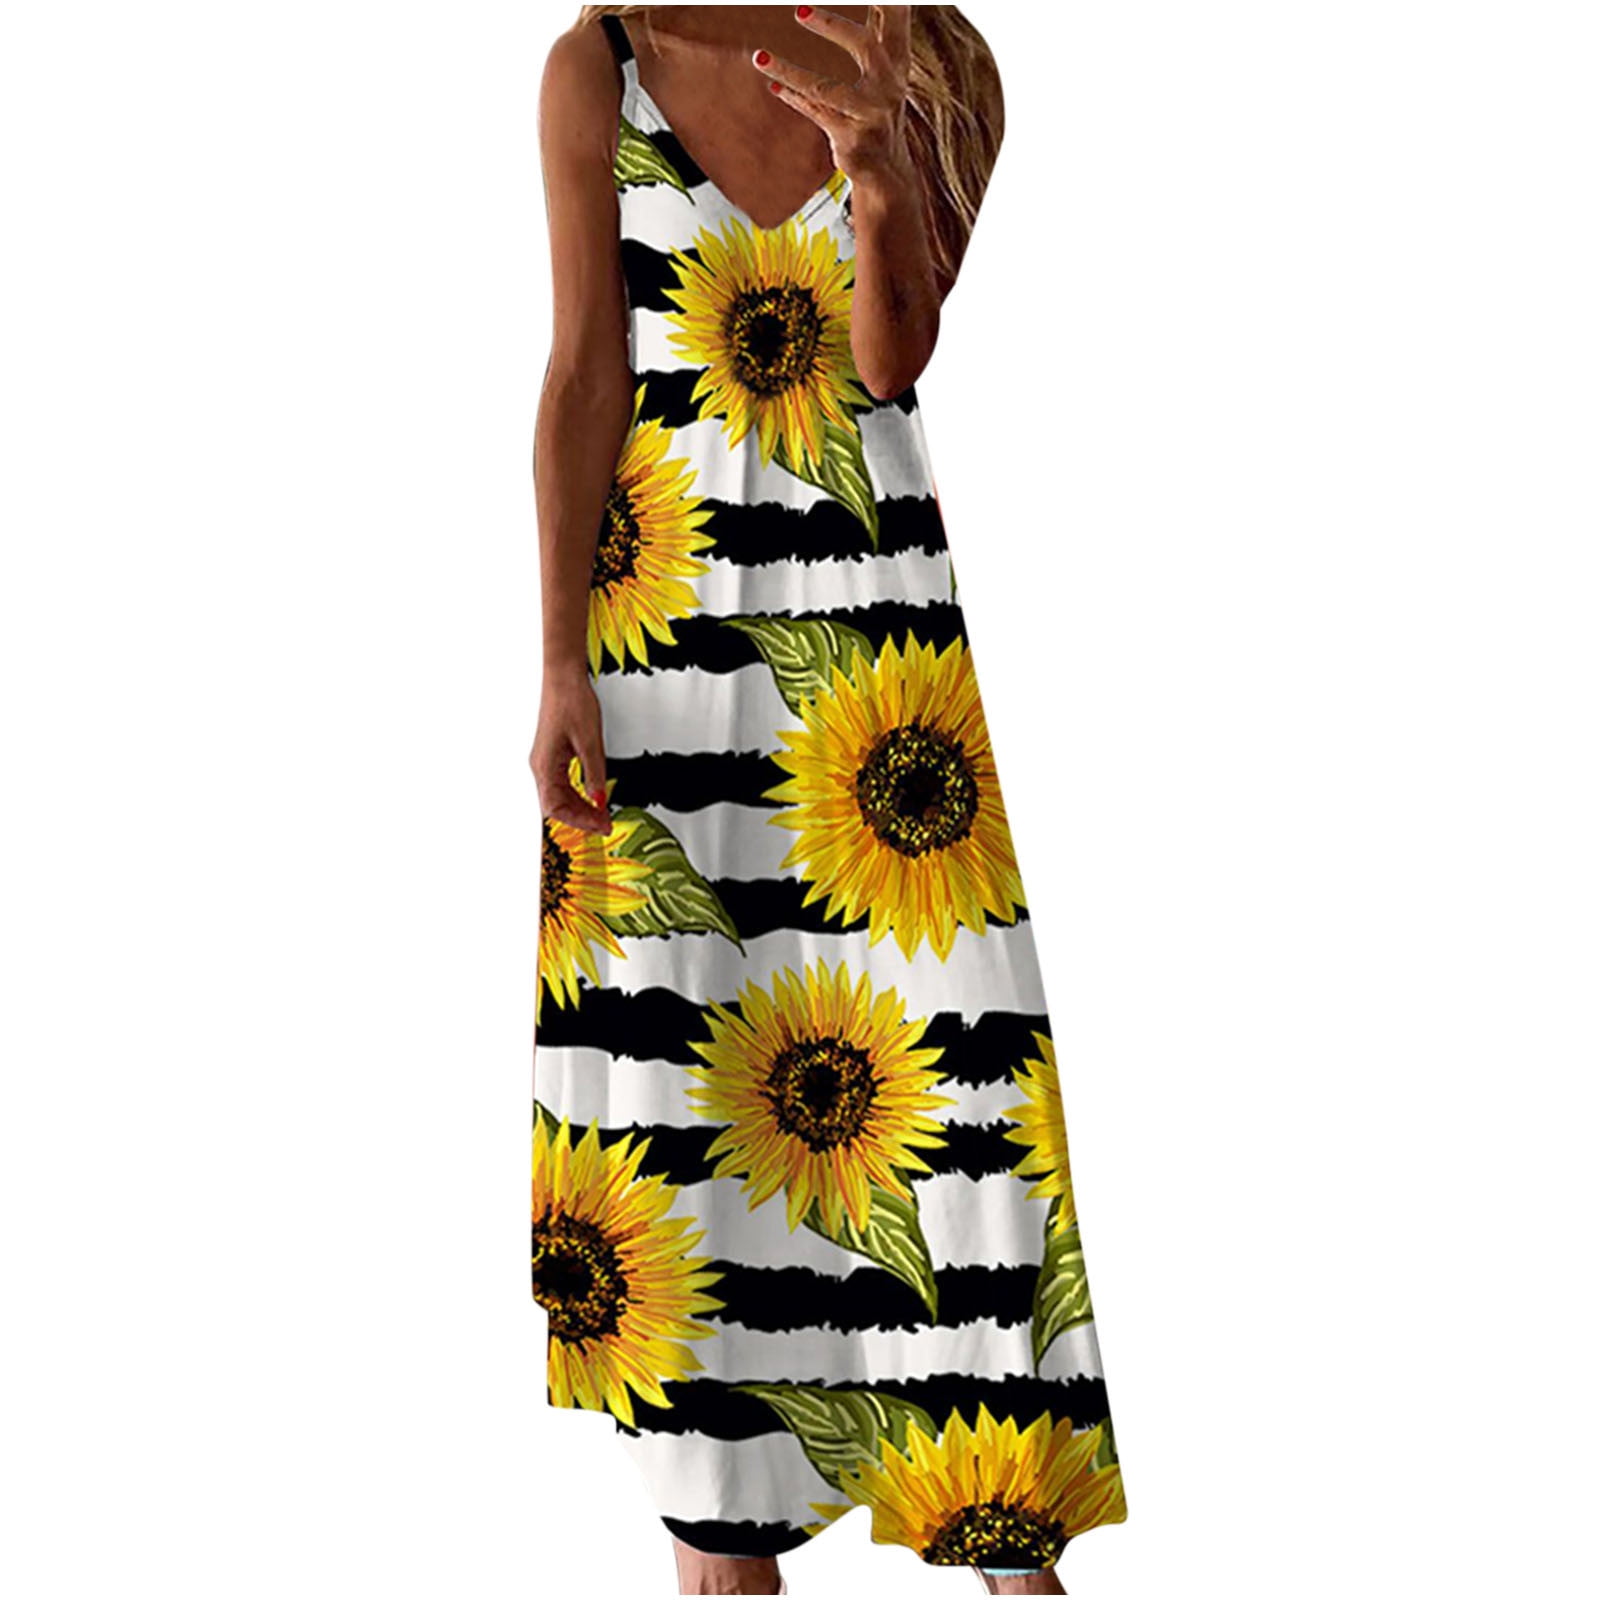 Ussuma Dresses For Women Party Casual Women S Dresses Sunflower Print Spaghetti Strap V Neck